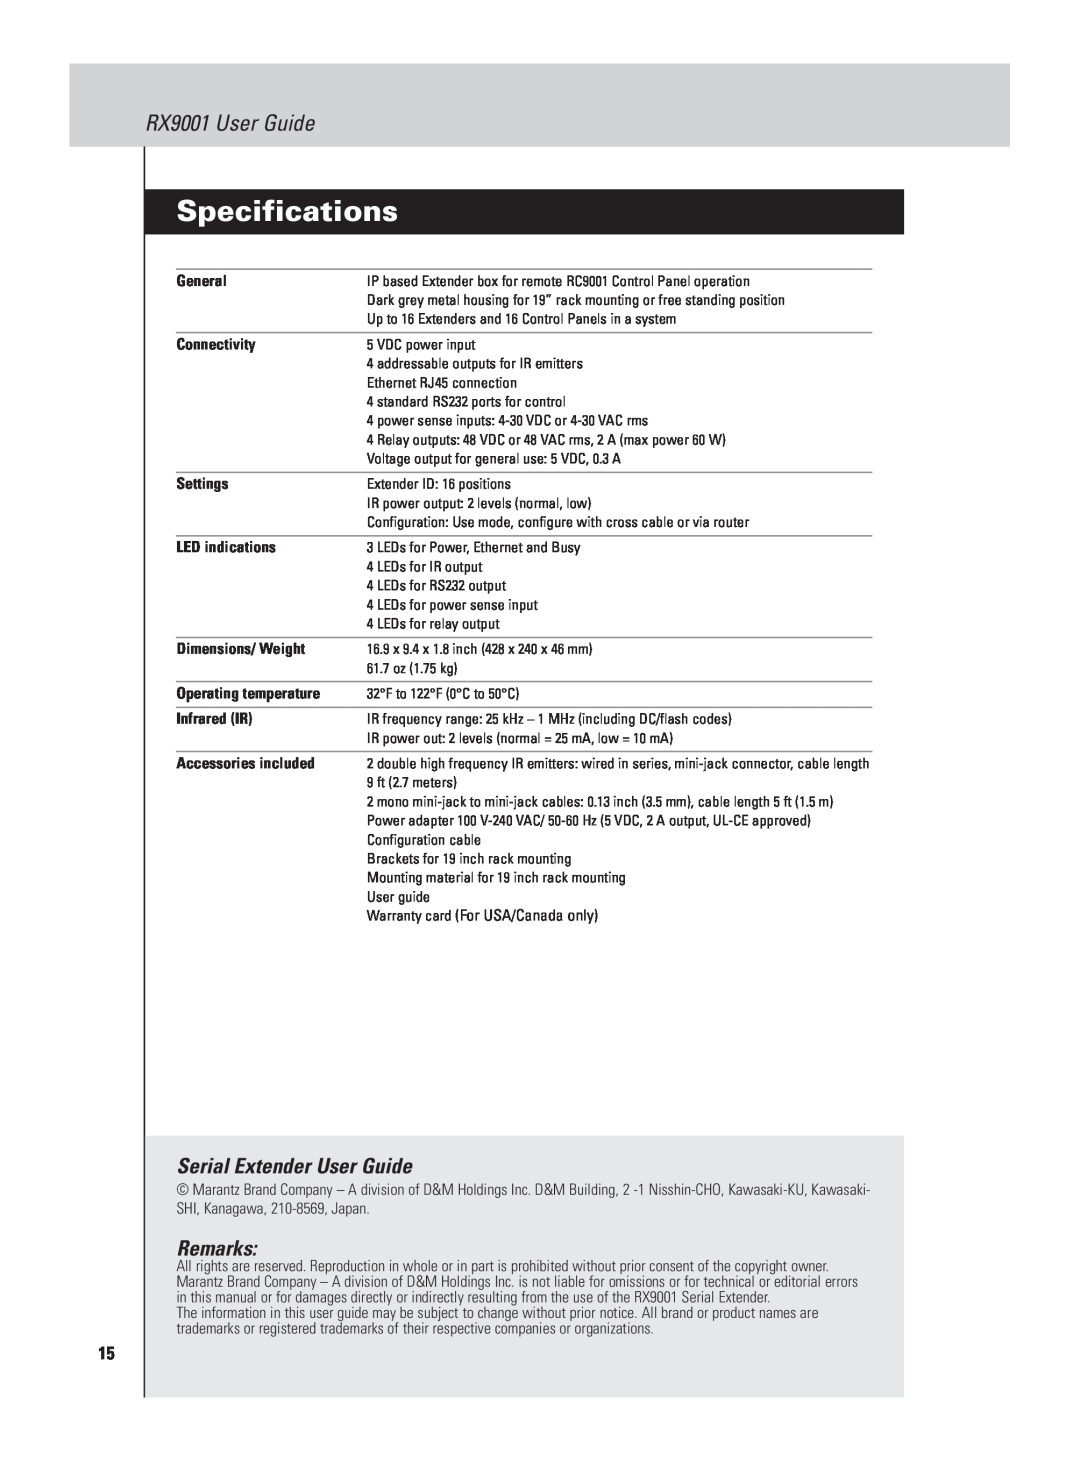 Marantz manual Specifications, Serial Extender User Guide, Remarks, RX9001 User Guide 